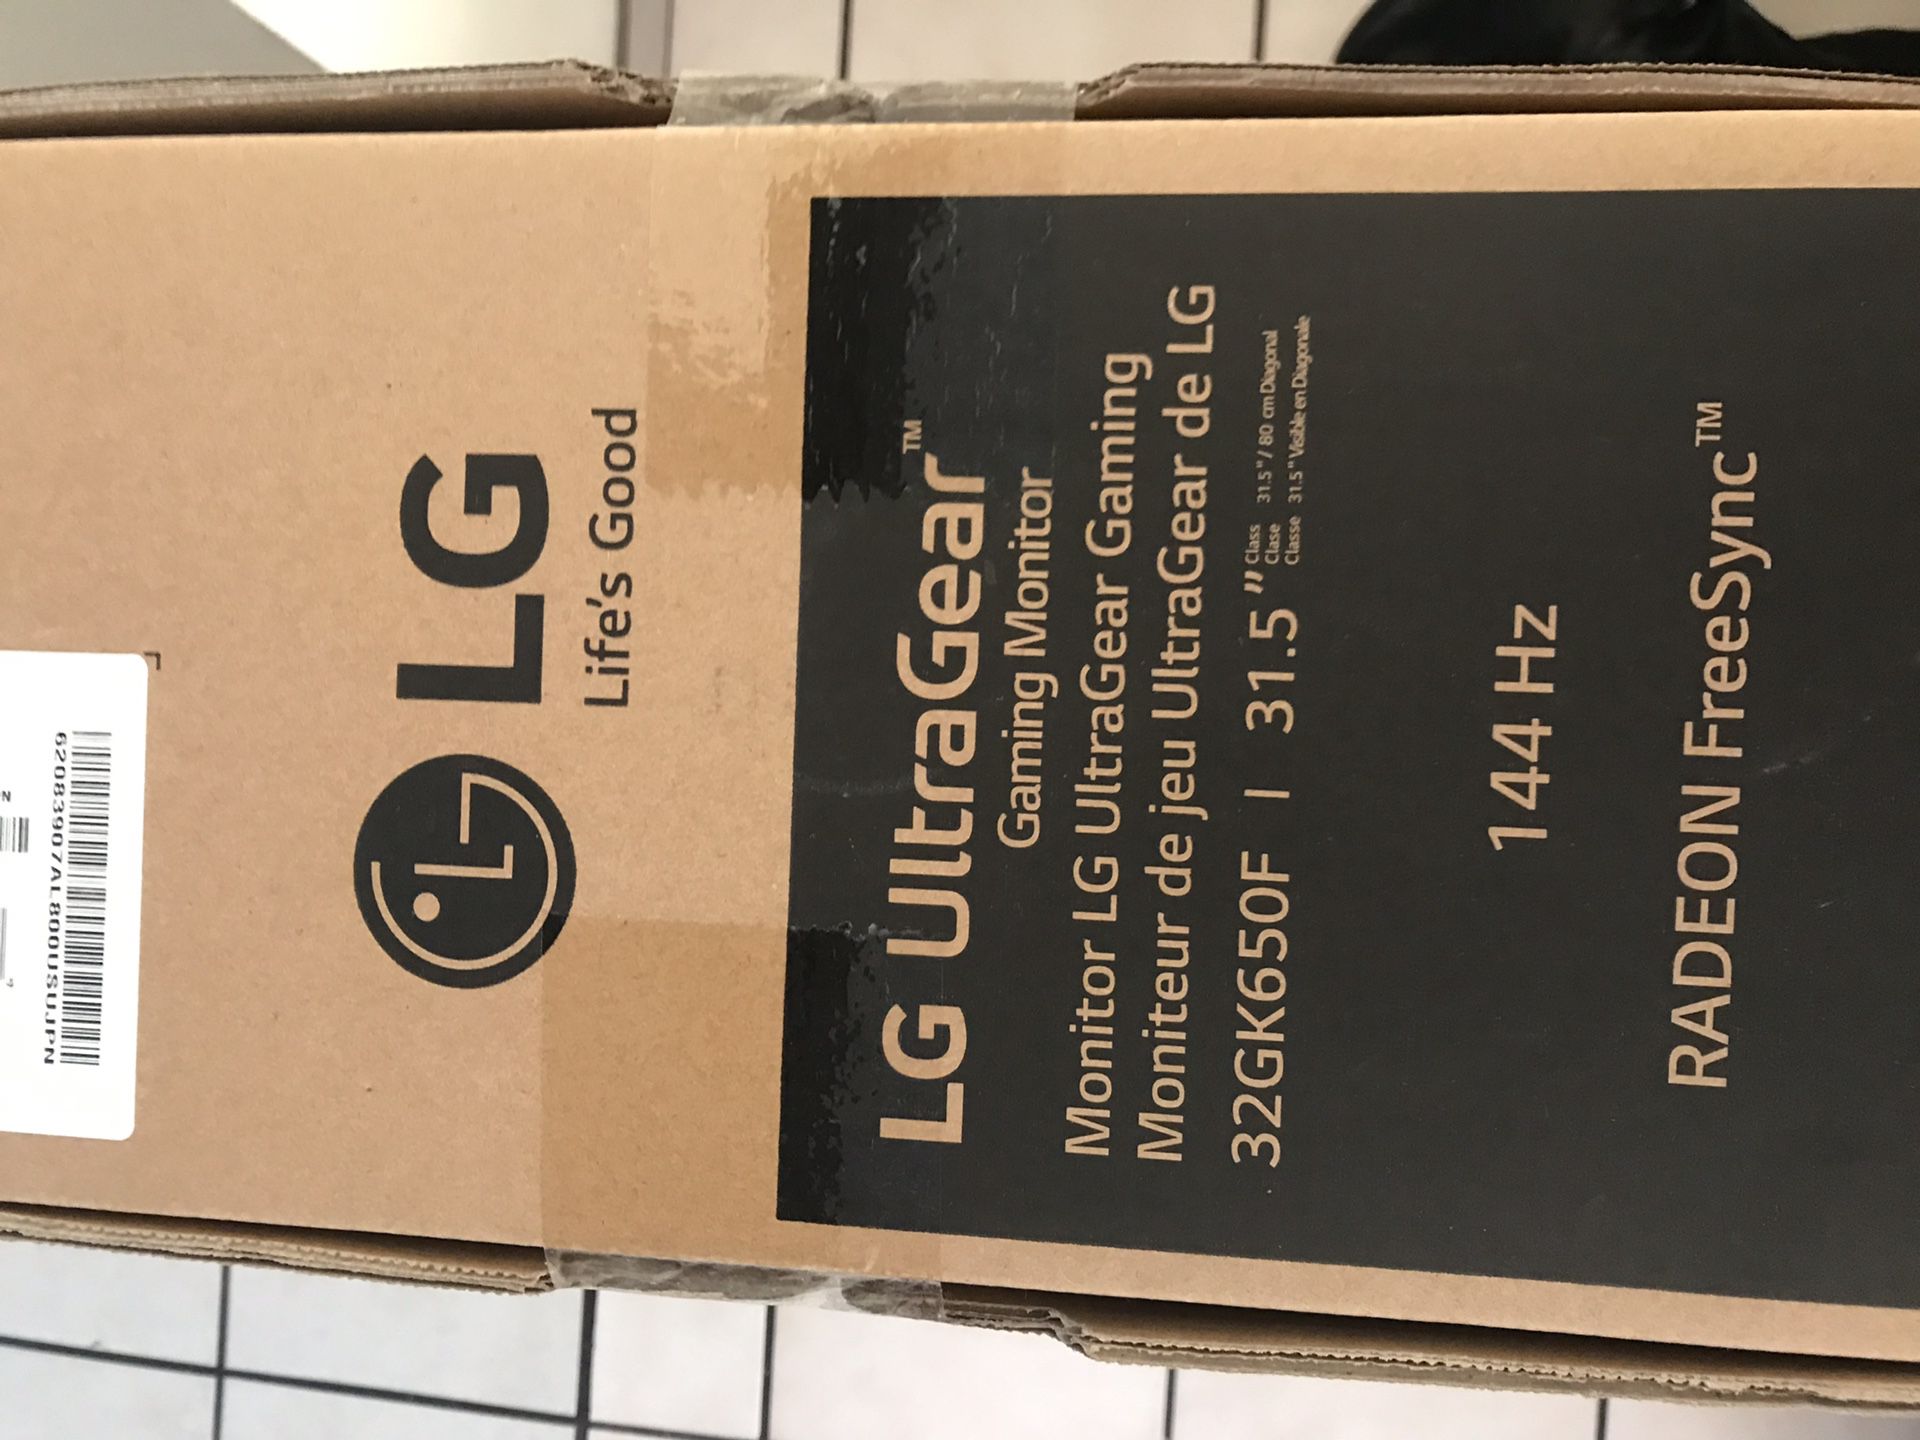 LG ultragear gaming monitor 31.5” 144hz